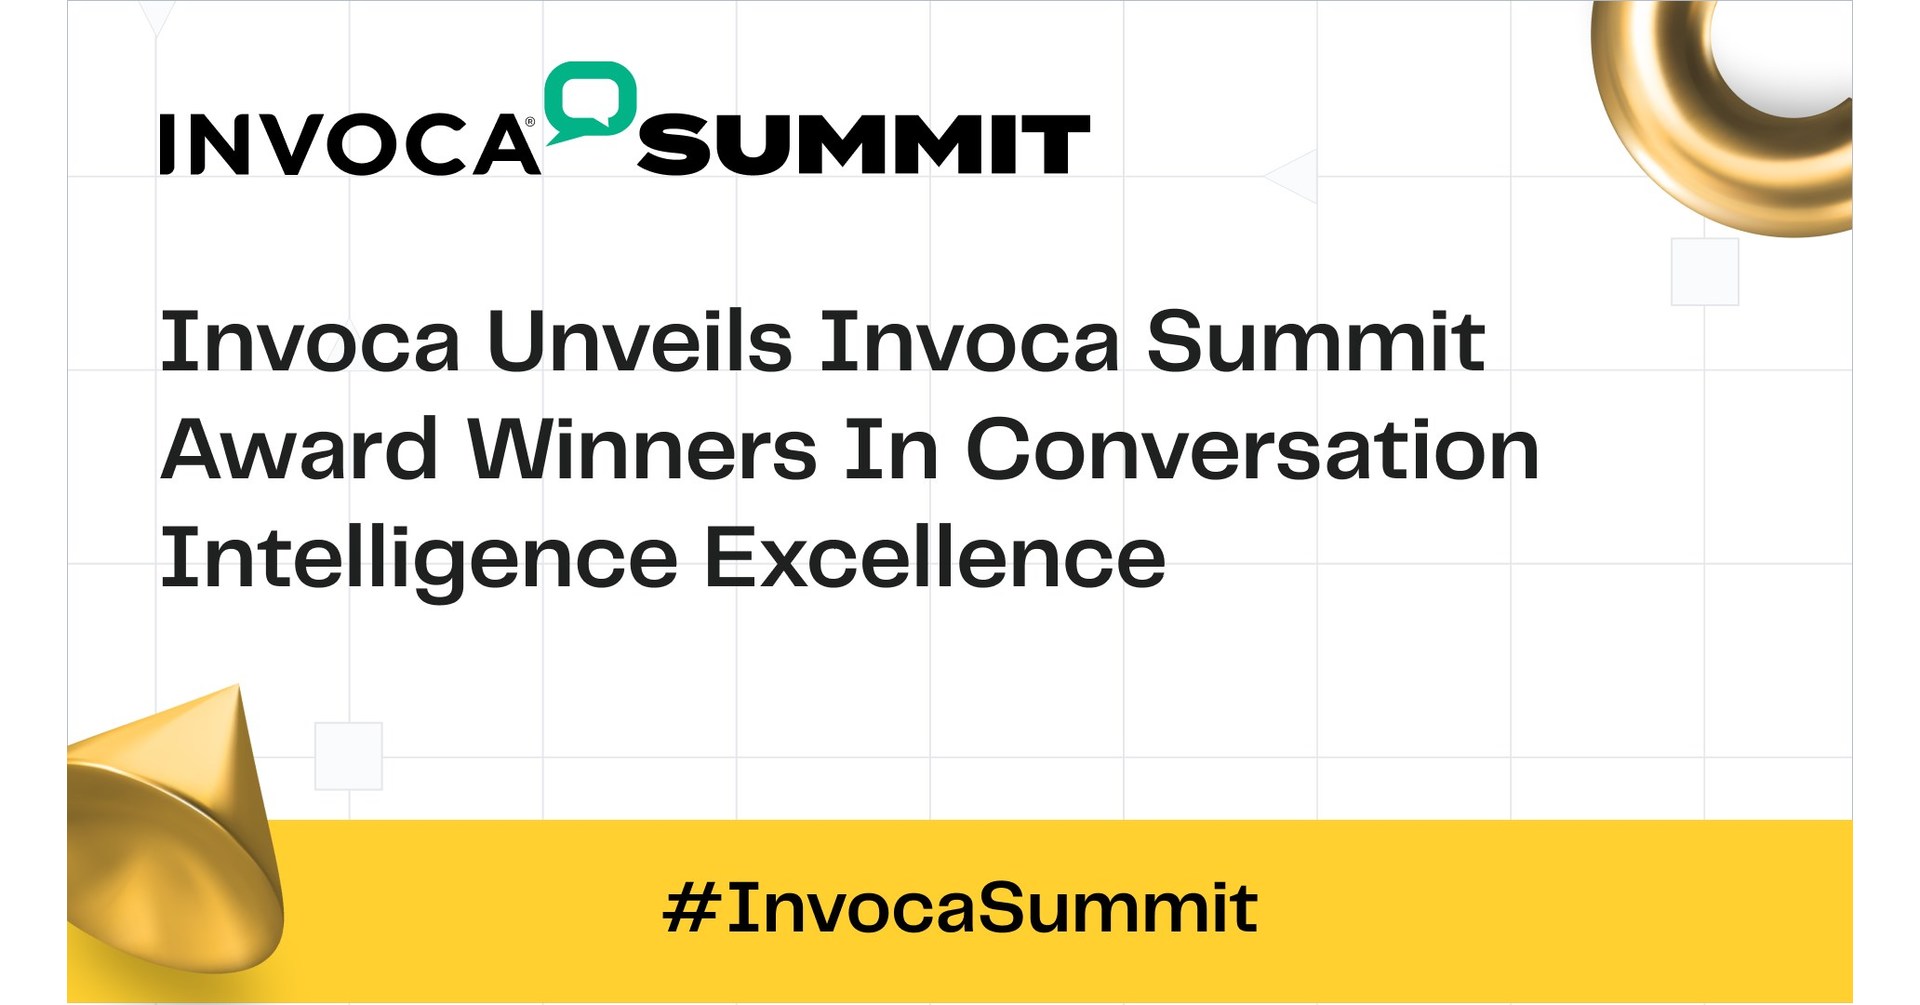 Invoca Unveils Invoca Summit Award Winners in Conversation Intelligence Excellence